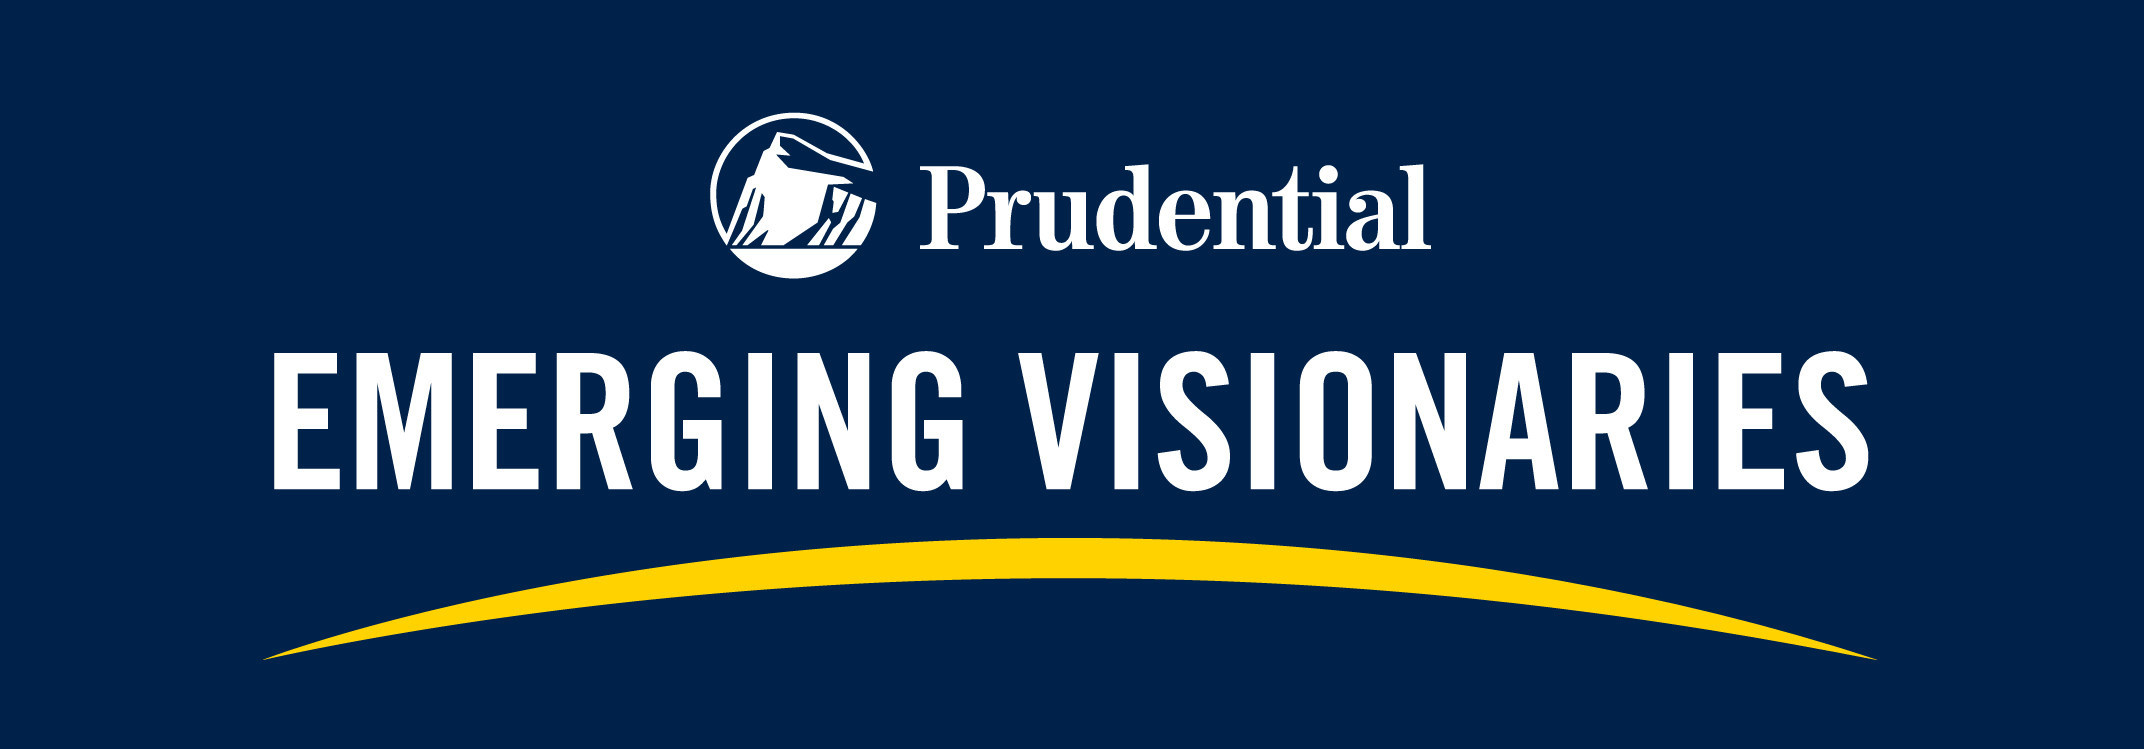 Emerging Visionaries logo (PRNewsfoto/Prudential Financial, Inc.)